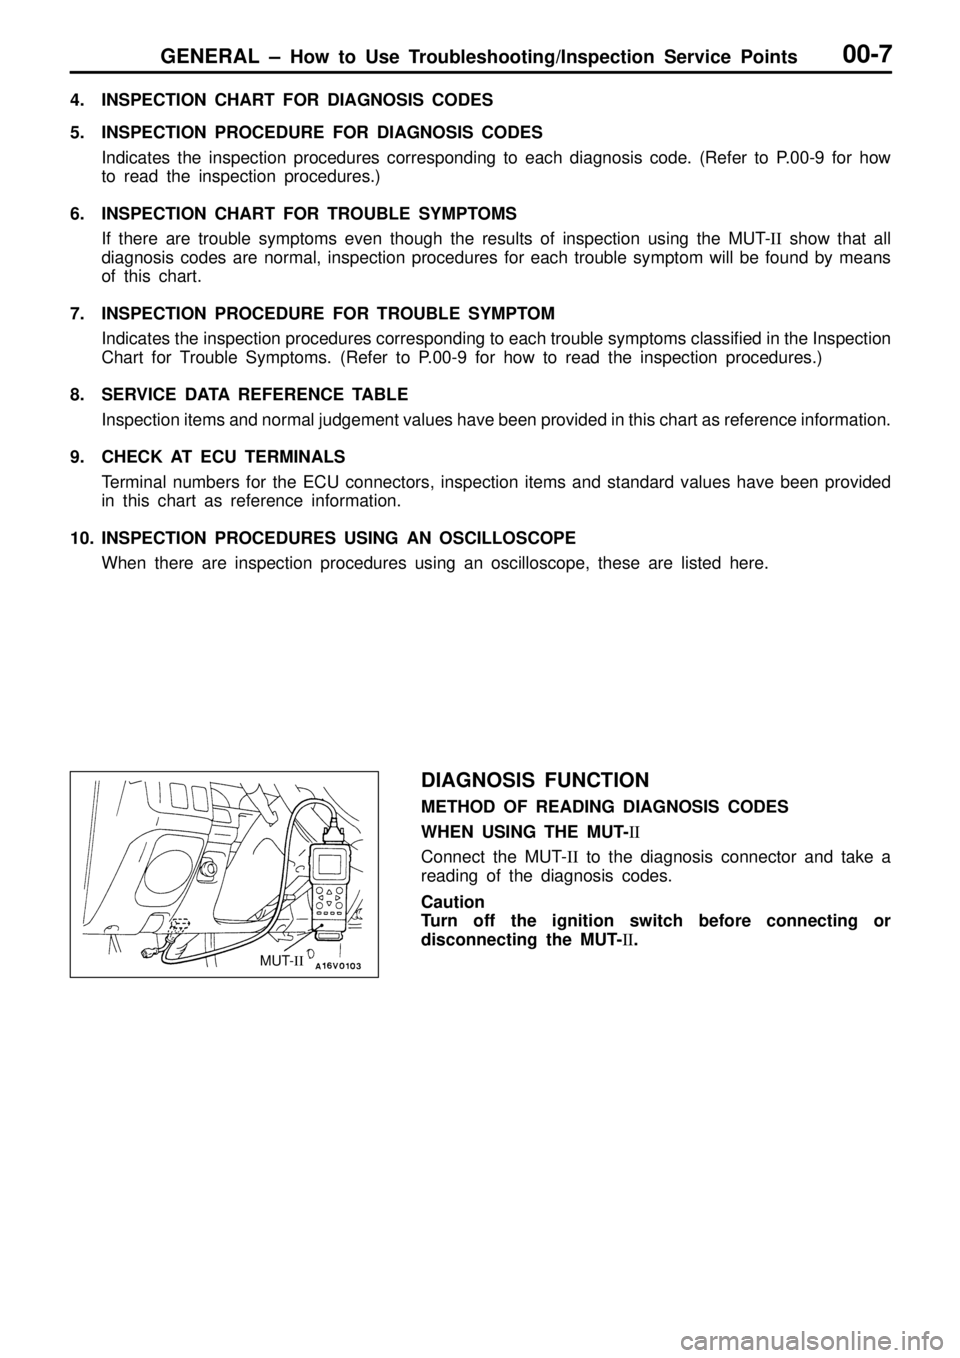 MITSUBISHI TRITON 1997  Workshop Manual 